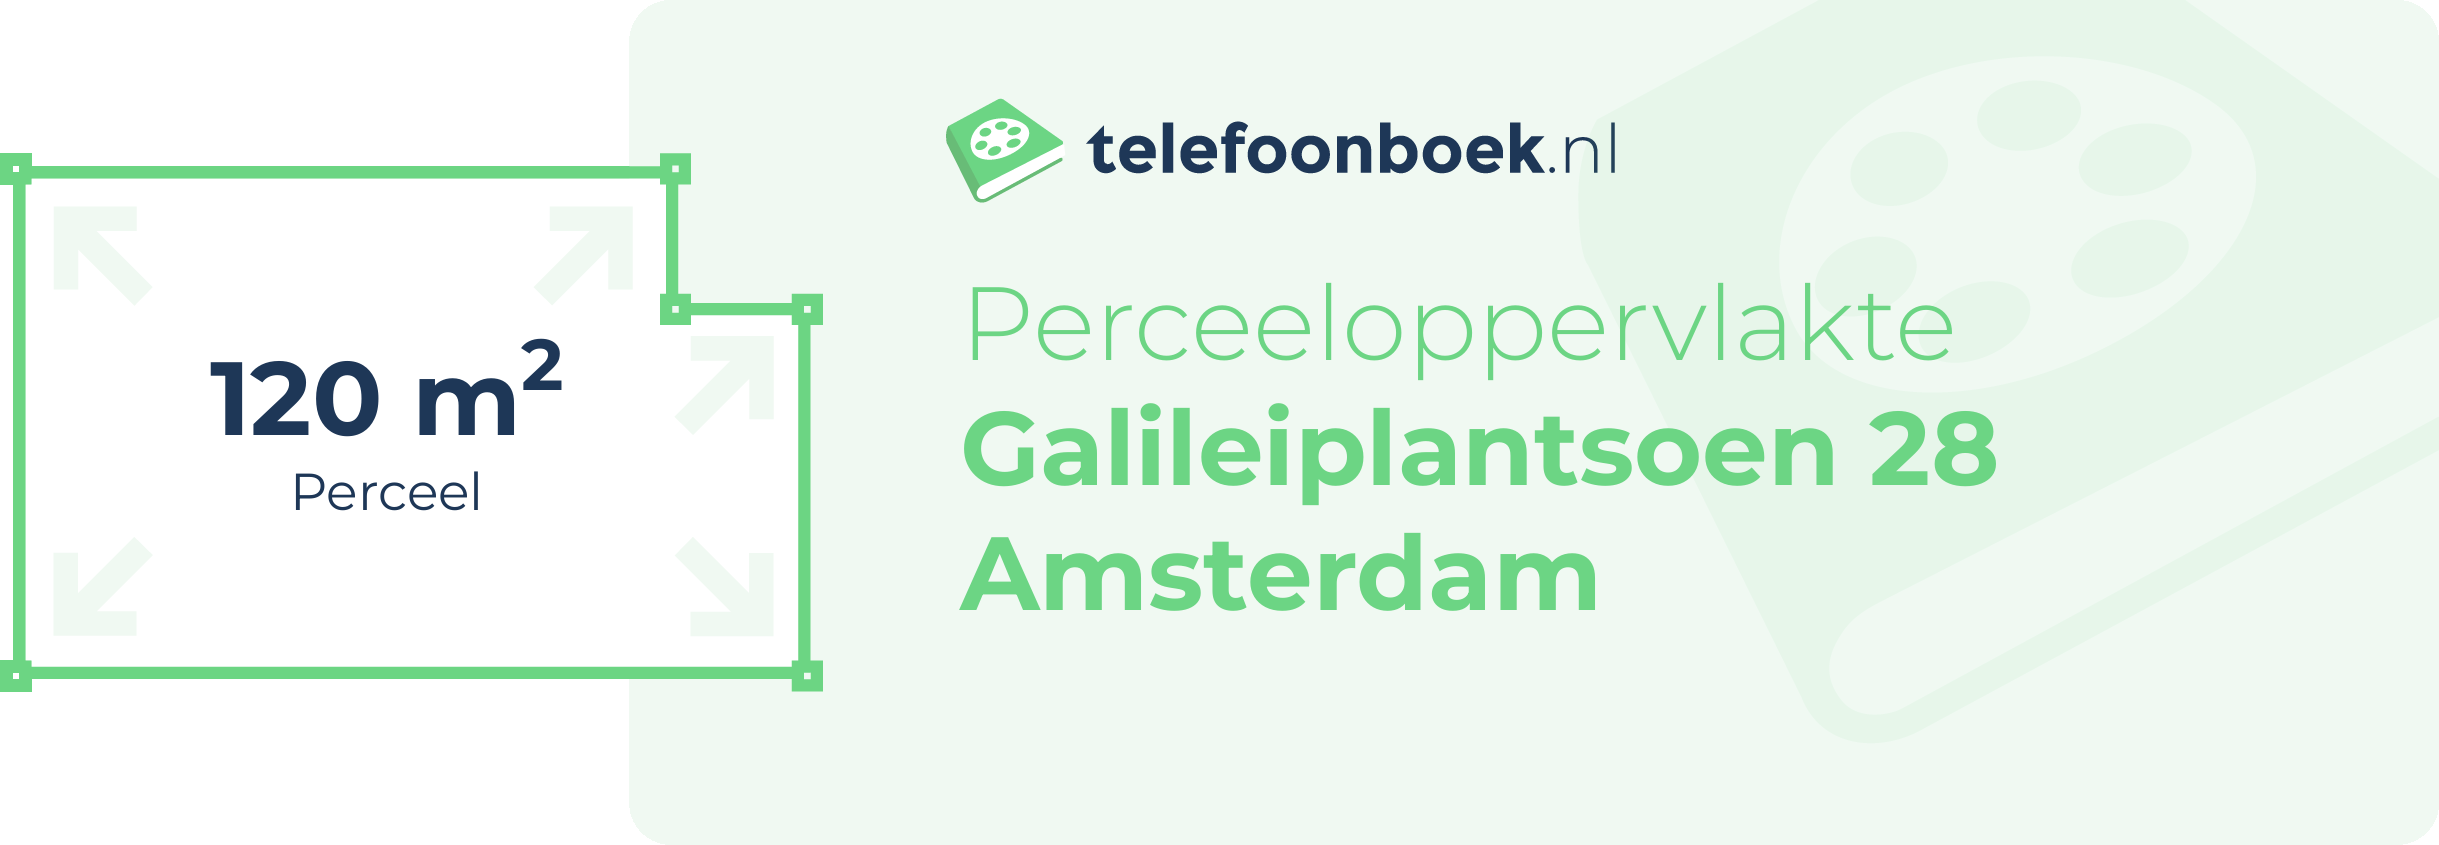 Perceeloppervlakte Galileiplantsoen 28 Amsterdam